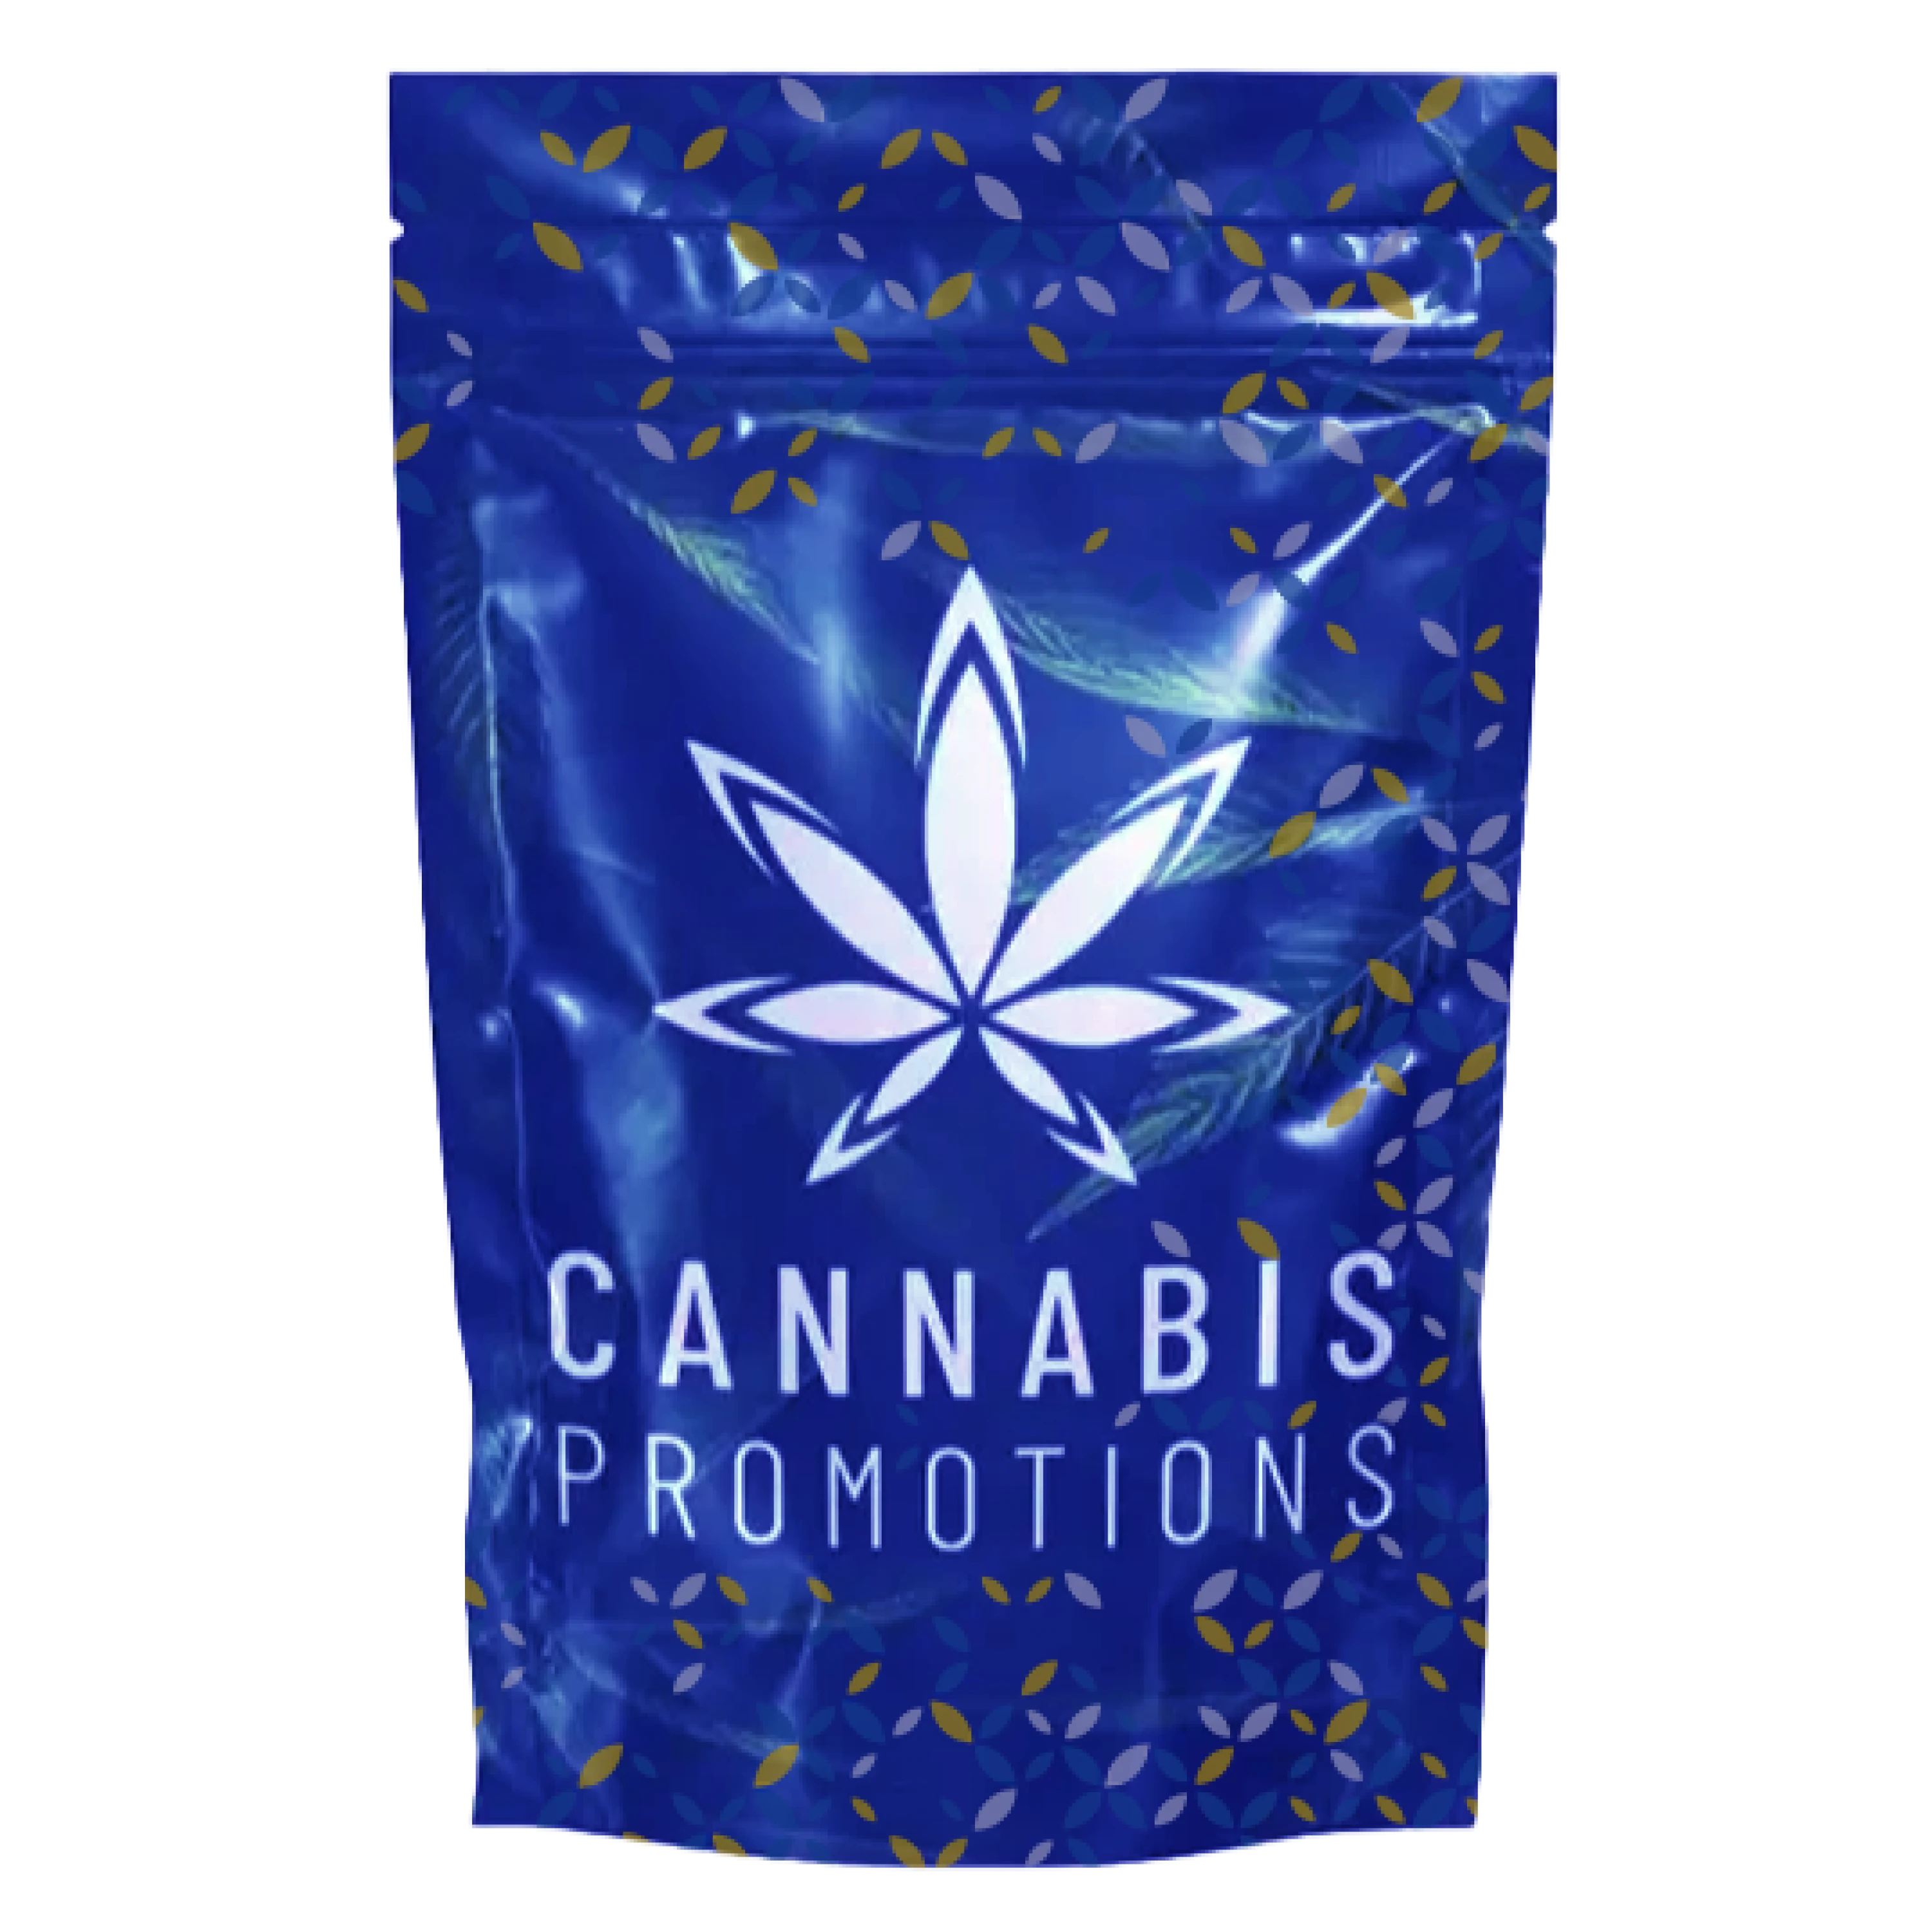 Carousel cannabis mylar bags packaging image 1 | The Box Lane